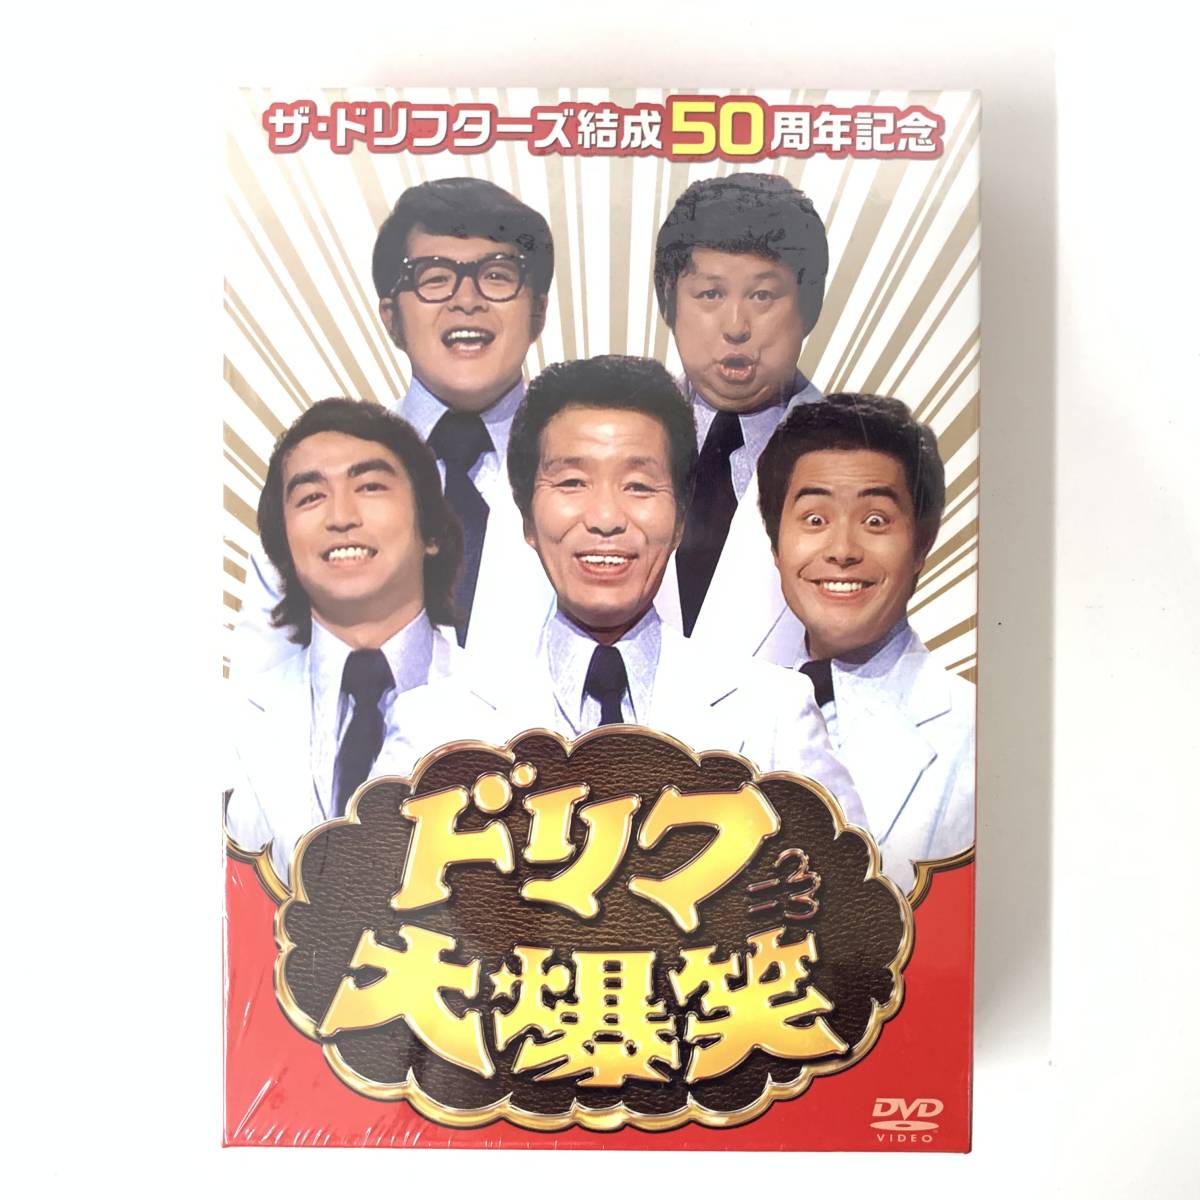 1404 DVD-BOX 3枚組 ザ ドリフターズ結成50周年記念 ドリフ大爆笑の